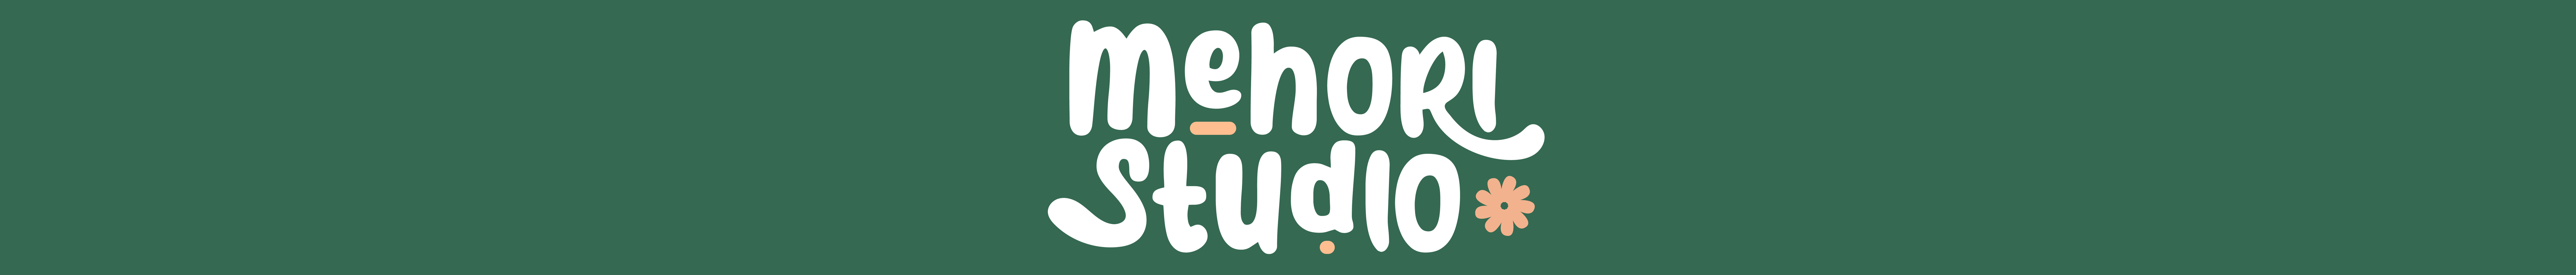 Mehori Studio's profile banner